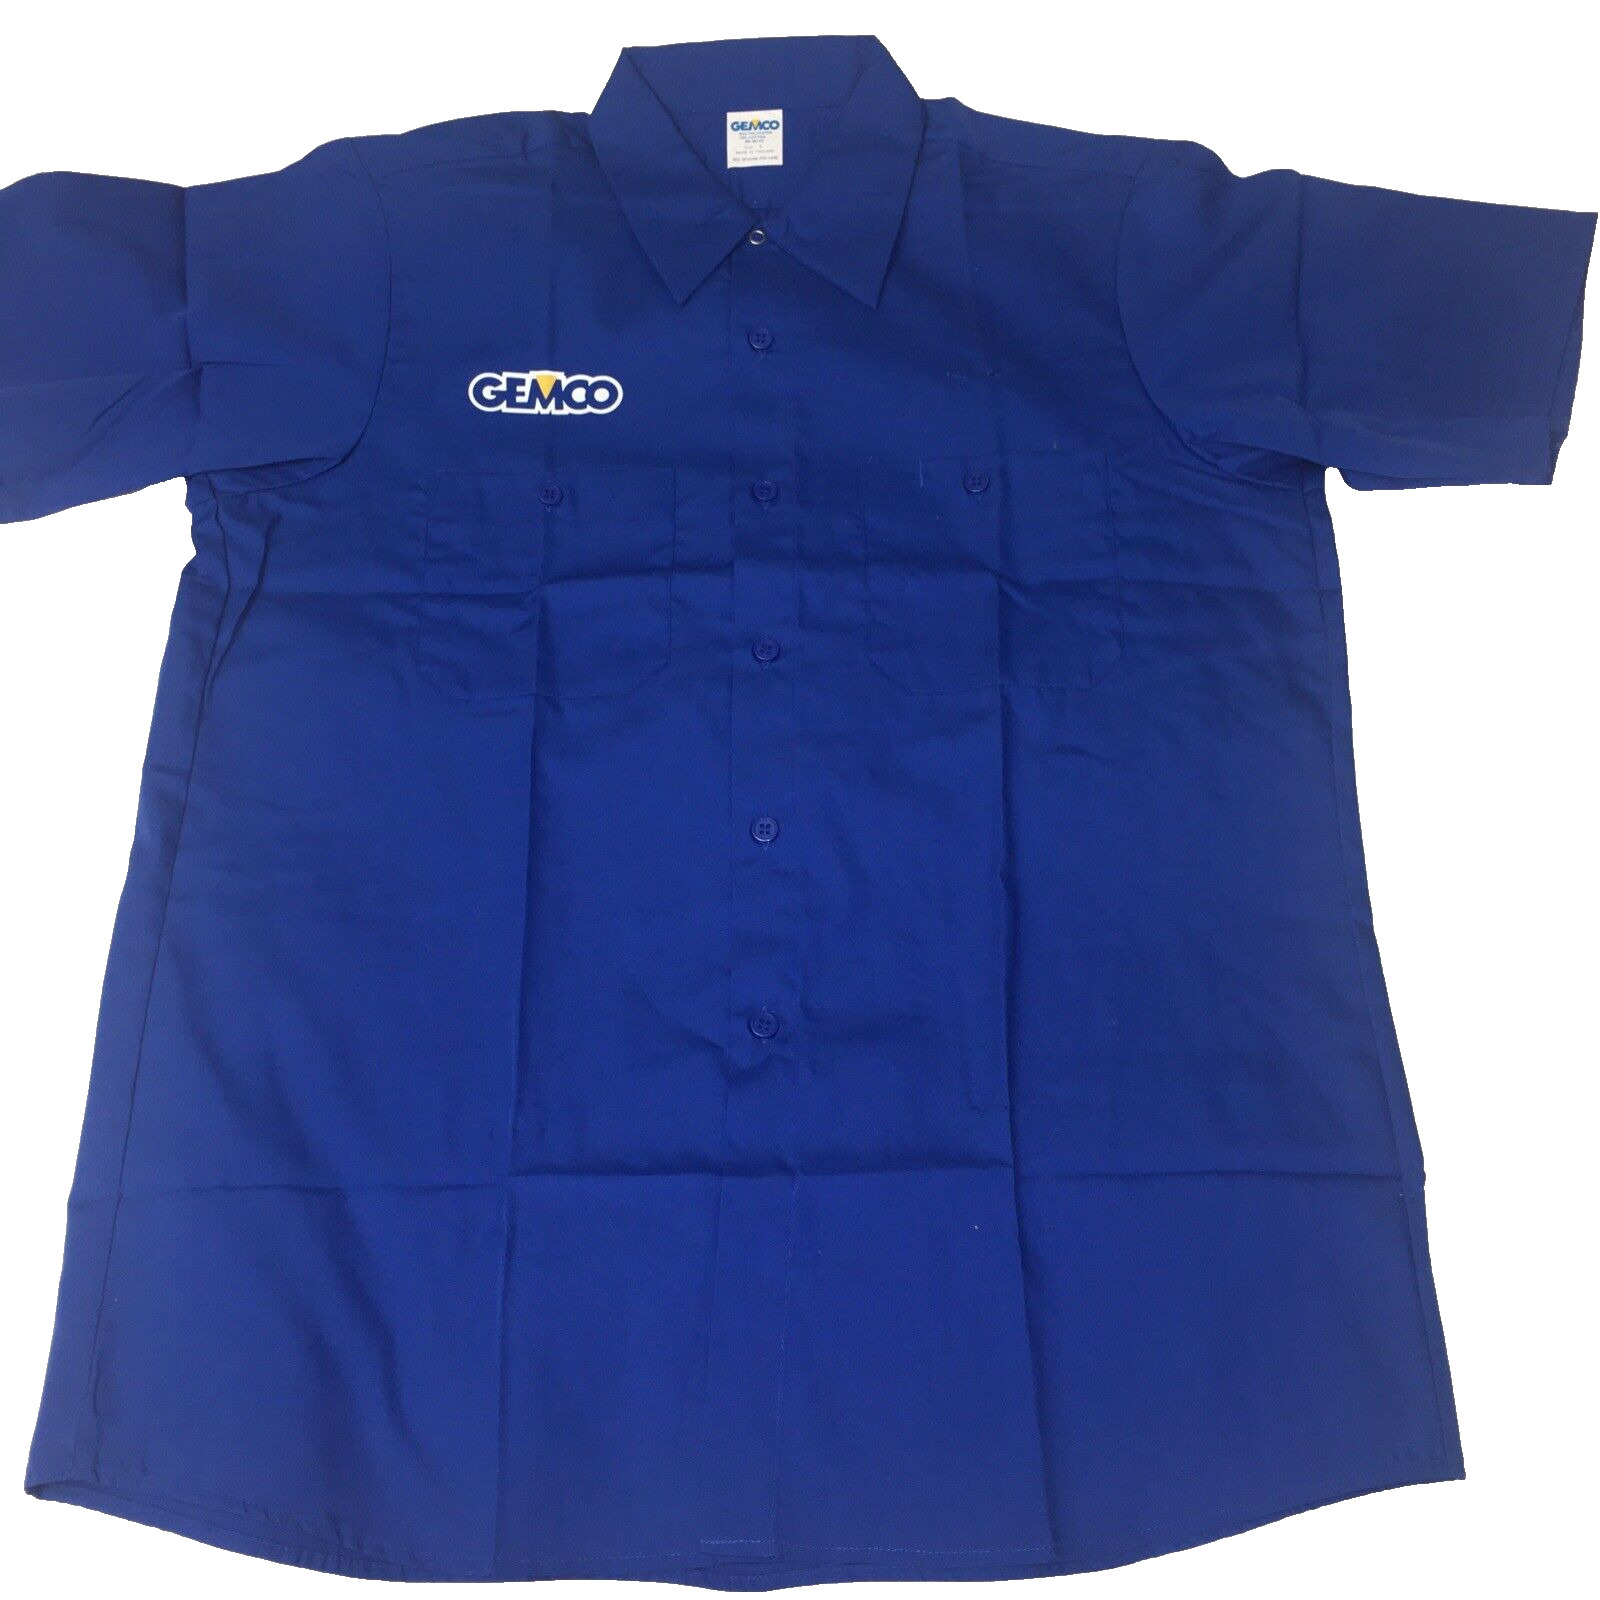 Vintage VTG GEMCO Store Blue Uniform Shirt 1980s Size Large BRAND NEW NOS